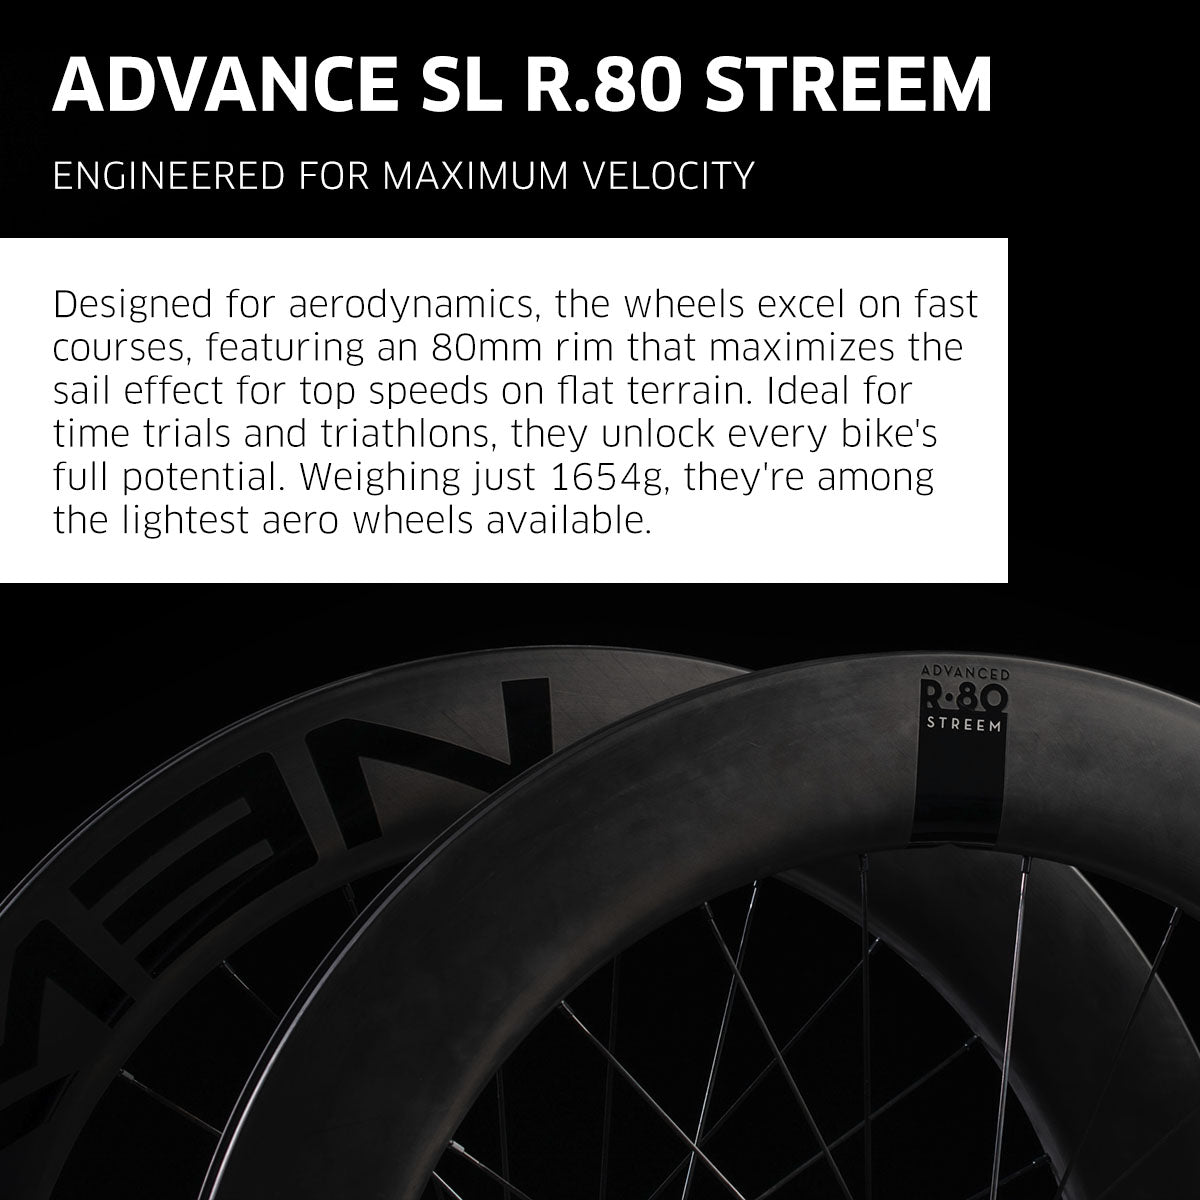 Newmen Wheel - Advanced SL R.80 Streem